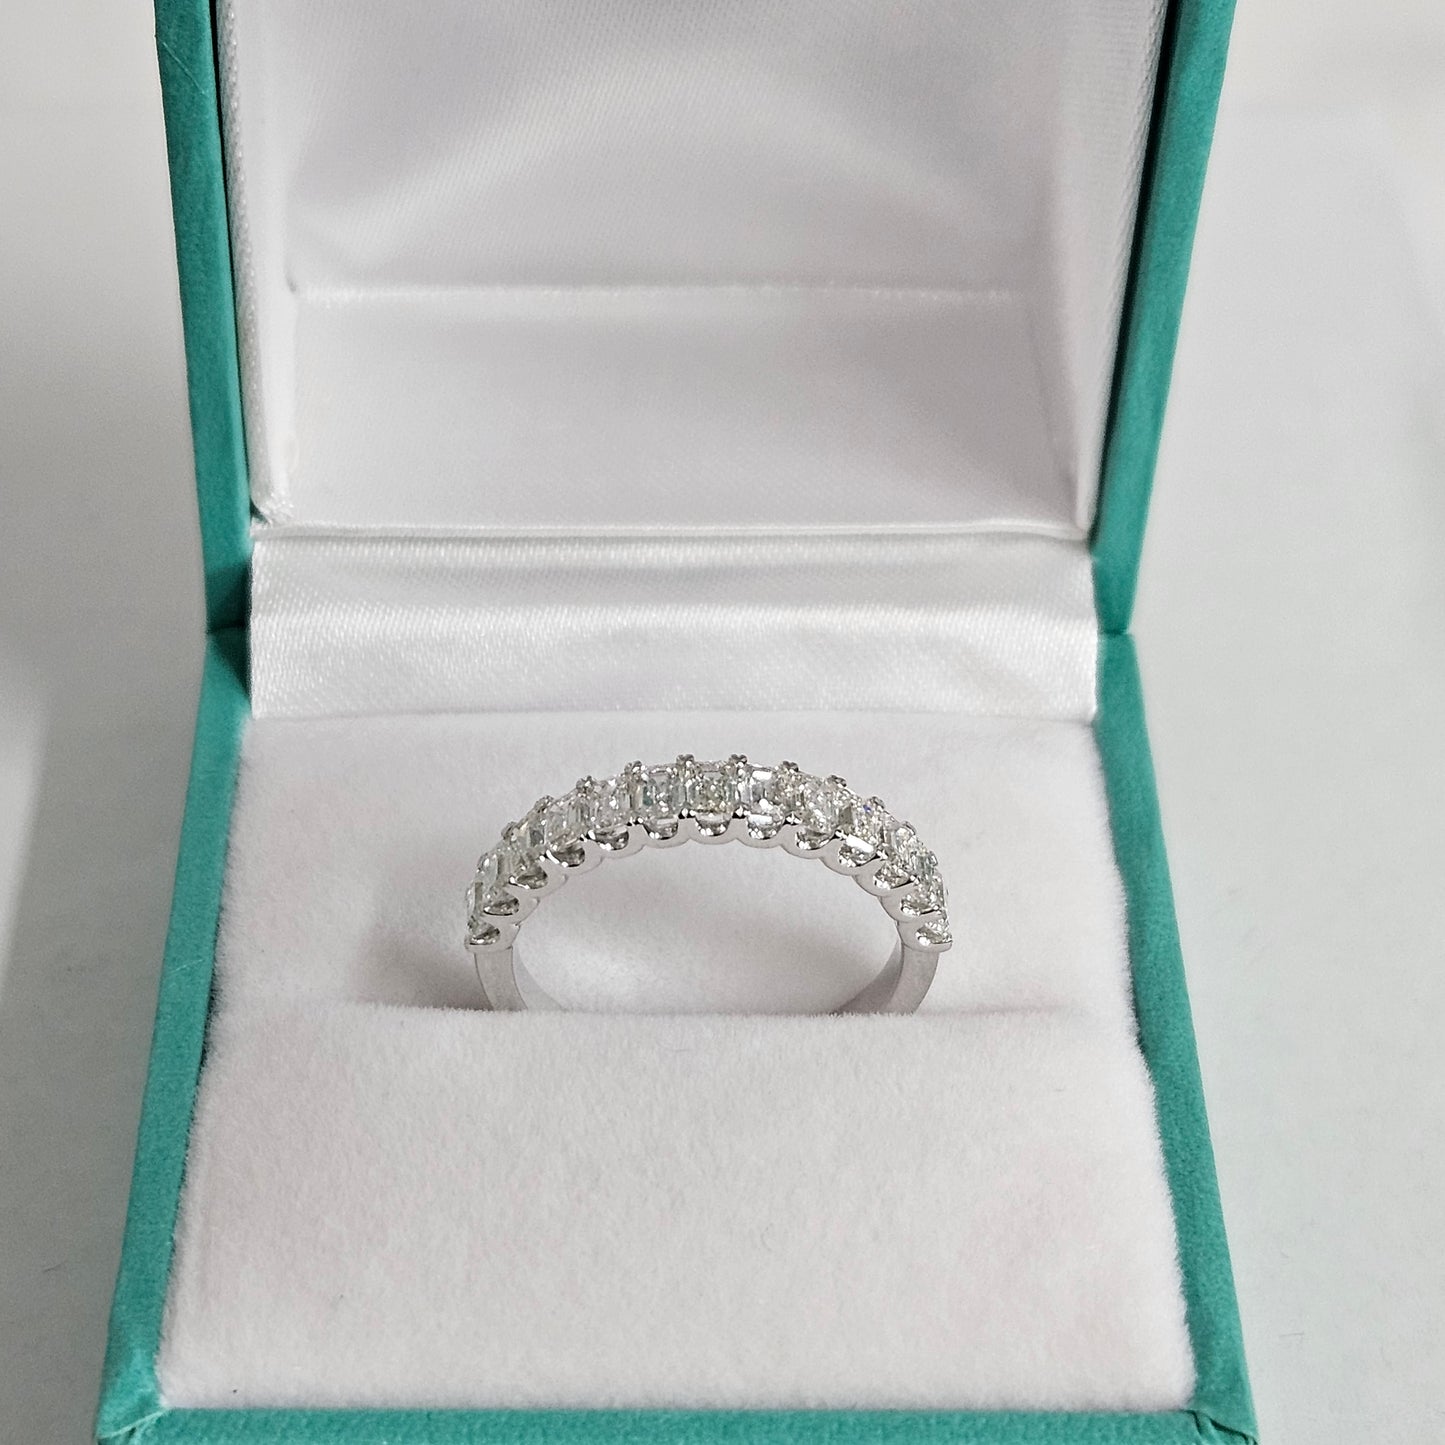 1.1ct Emerald Cut Diamonds Ring/Natural Emerald Cut Diamond Wedding Band/Half Eternity Wedding Ring/Anniversary gift/Stackable Diamond Band